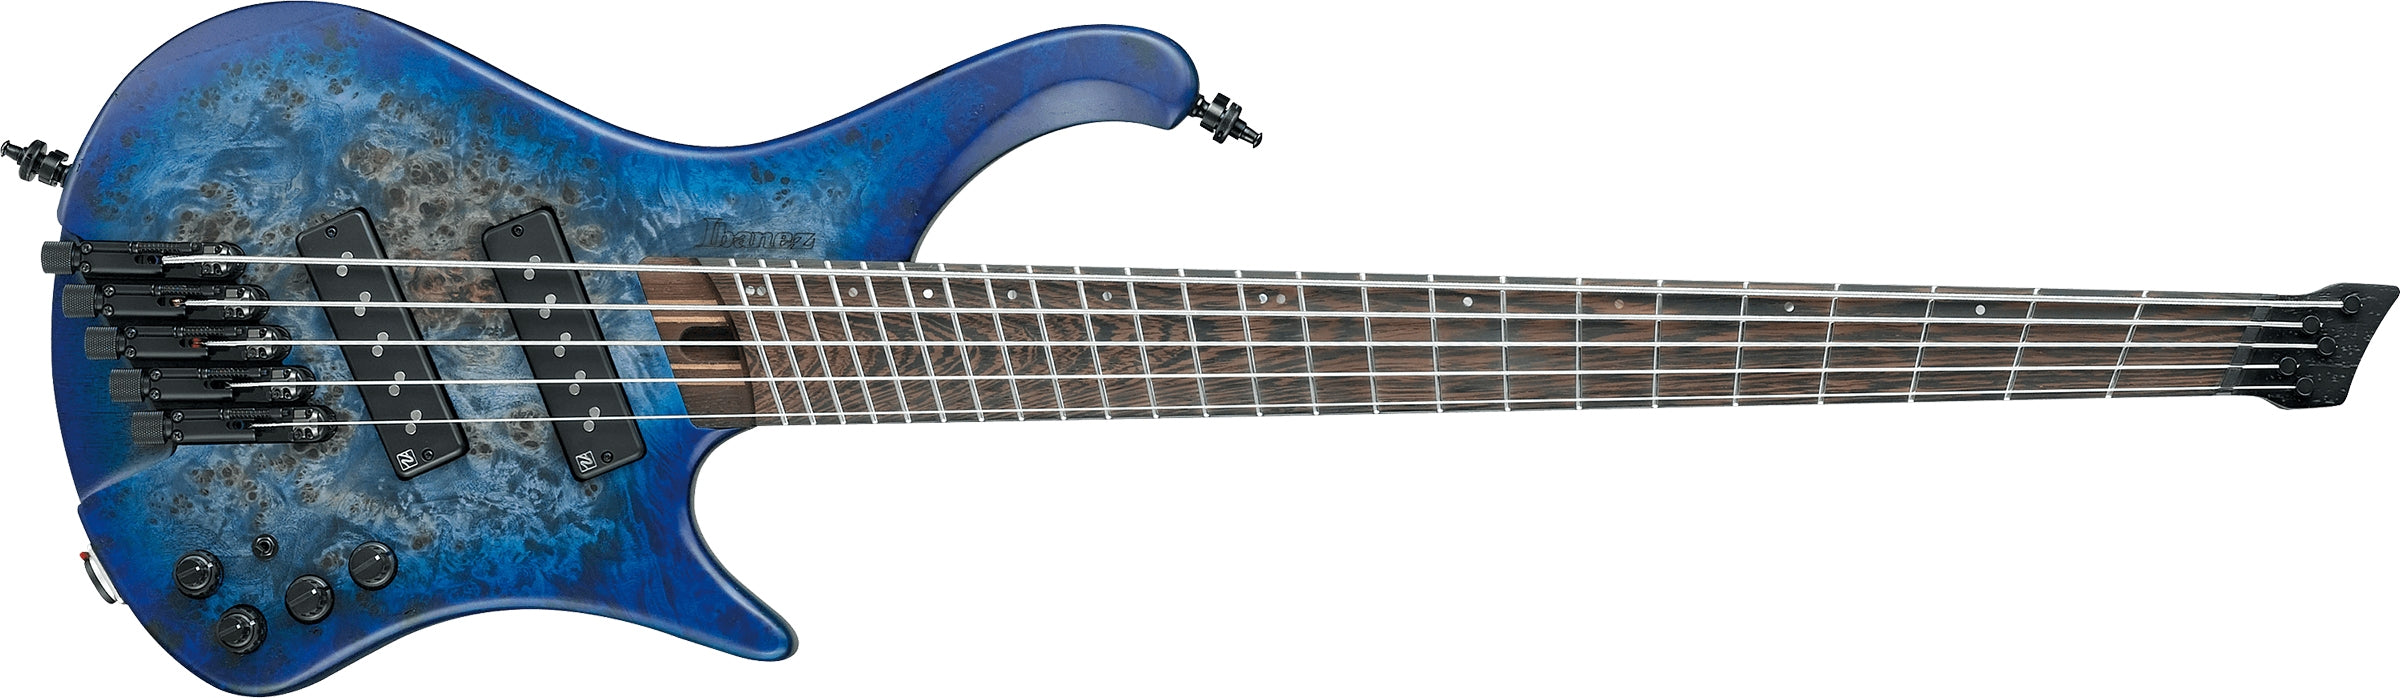 IBANEZ Bass Workshop EHB1505MS 5-string Headless Multi-scale Bass Guitar